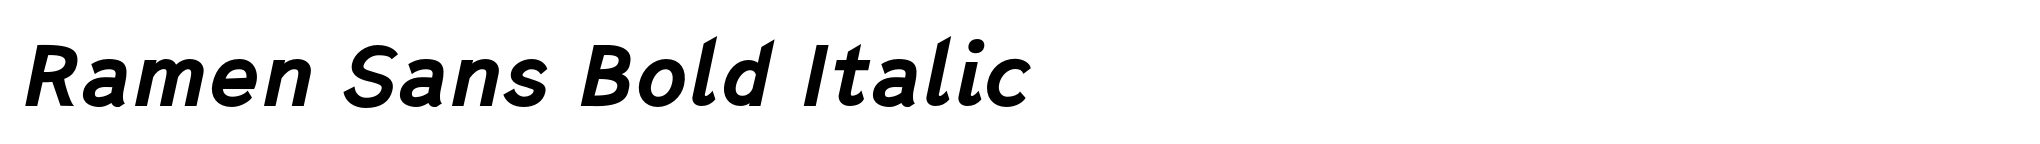 Ramen Sans Bold Italic image